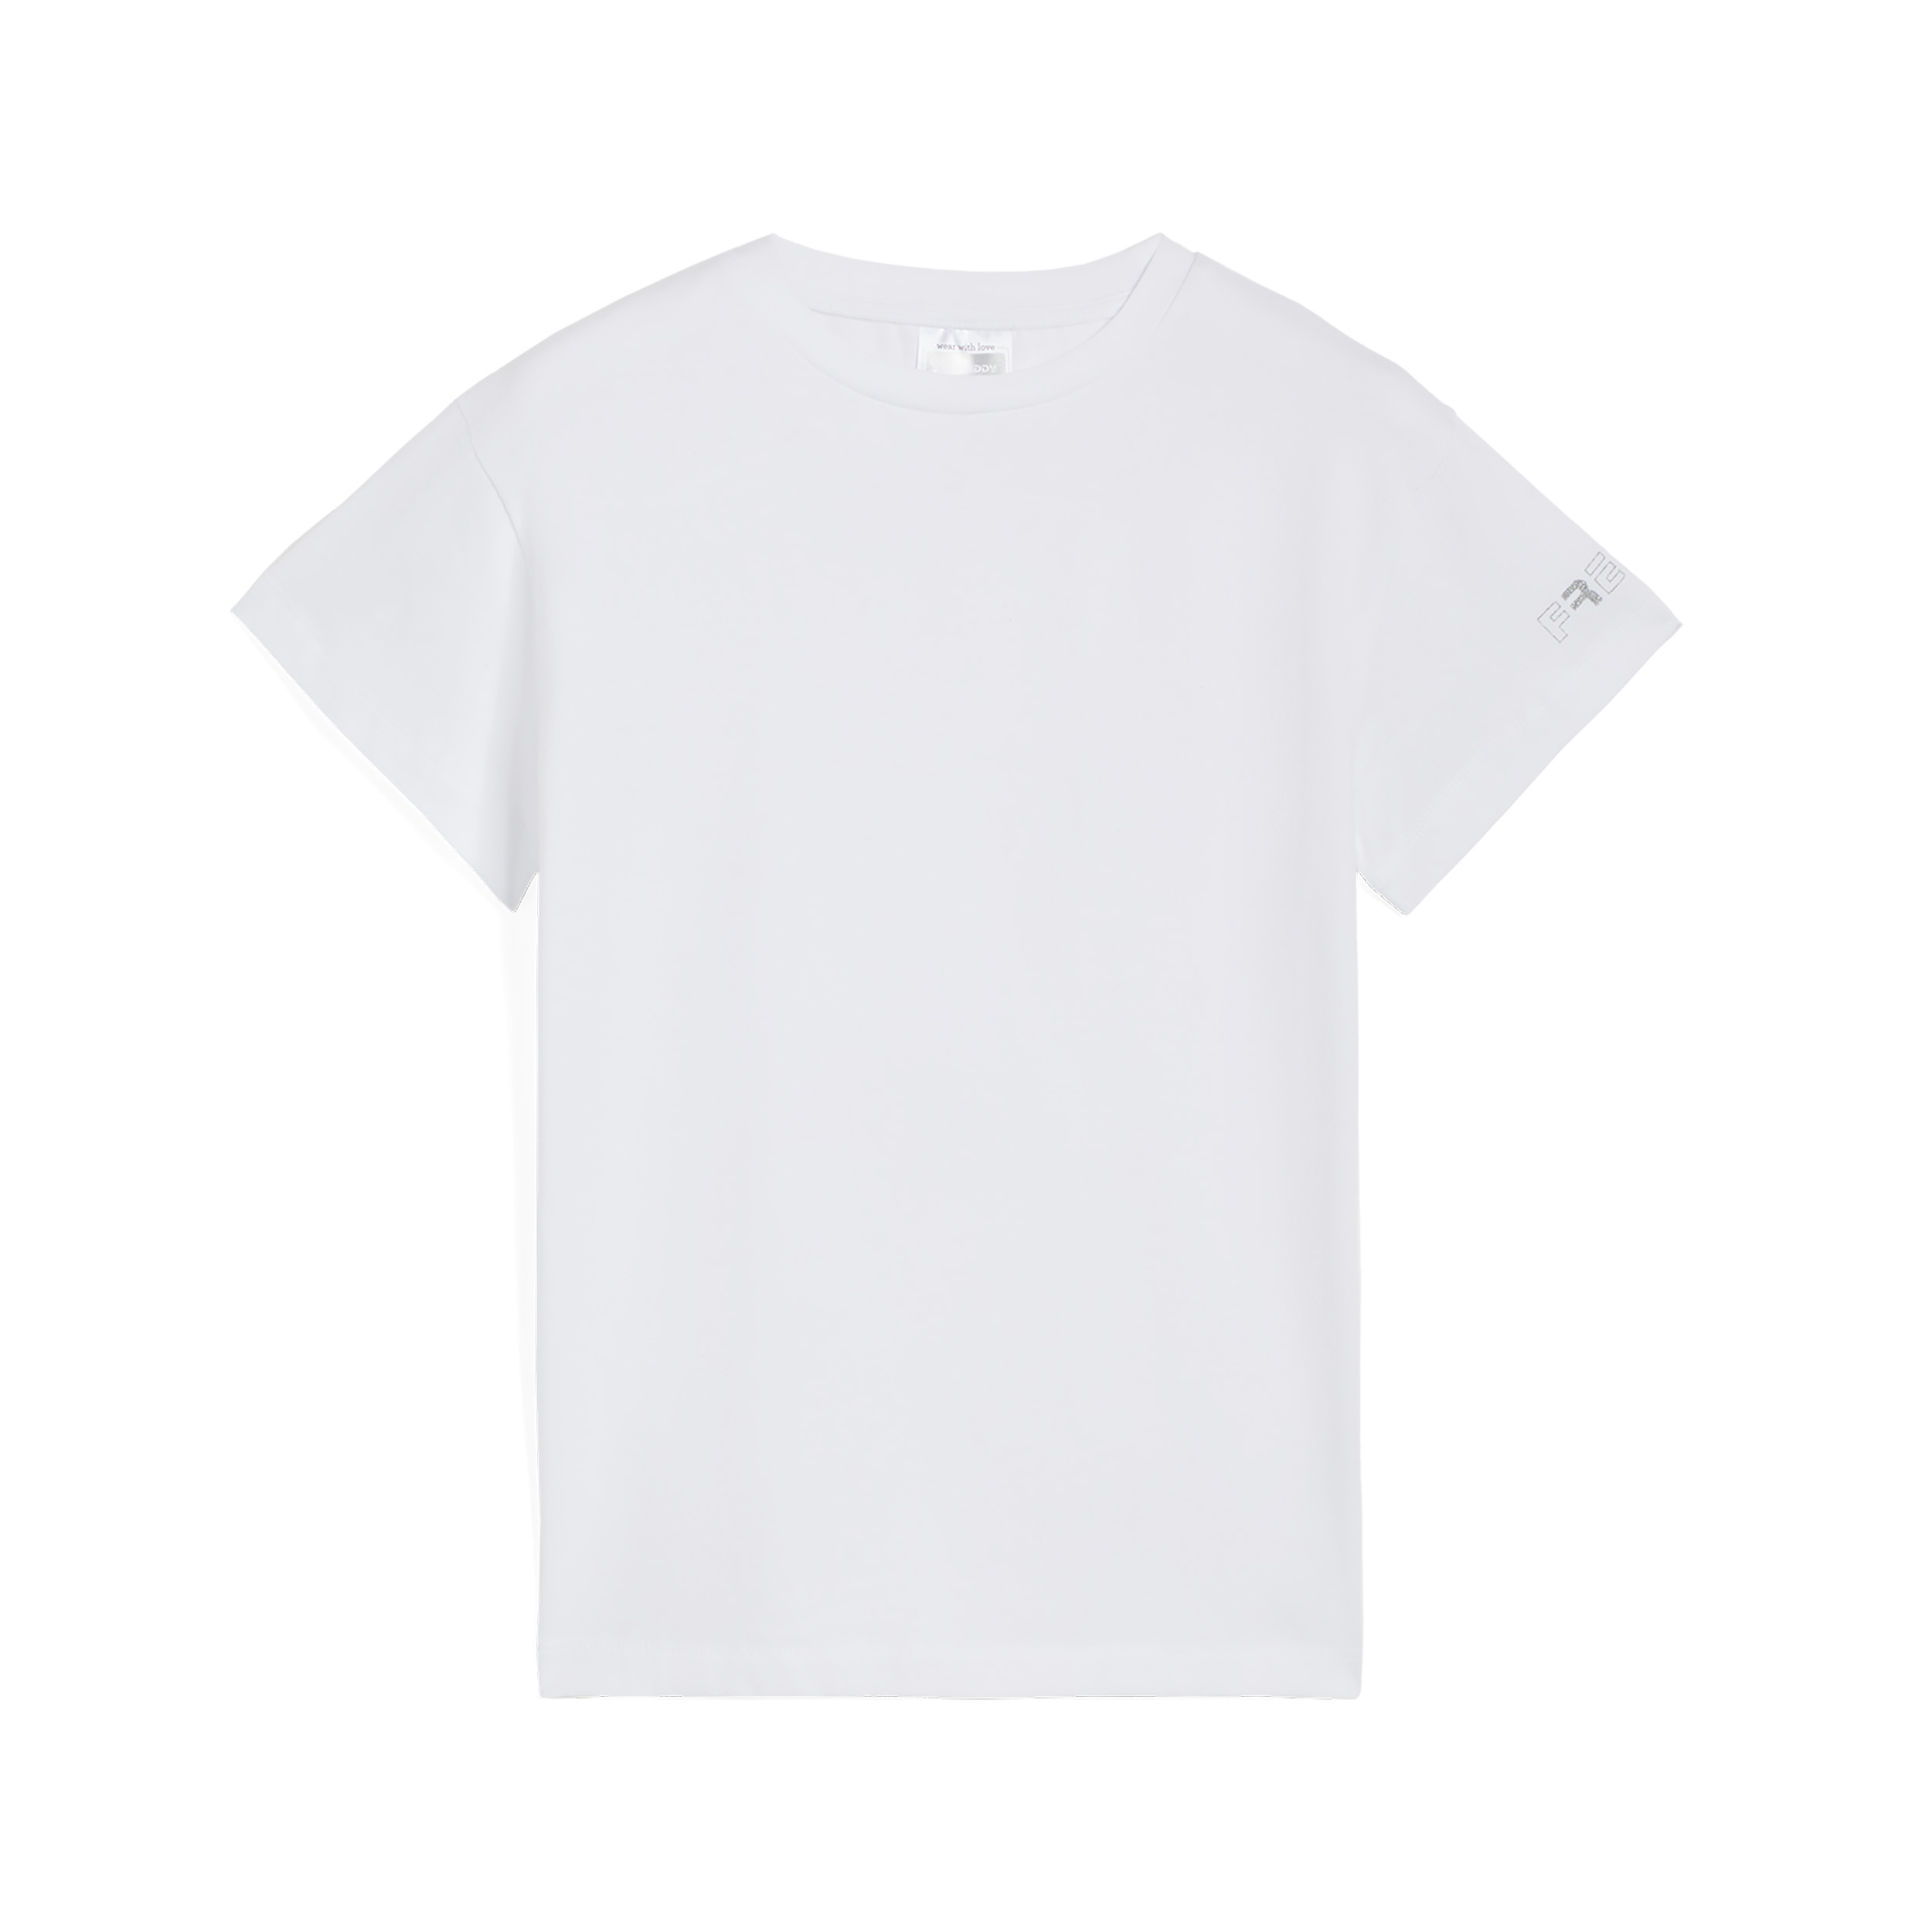 Freddy T-shirt da bambina regular fit con logo sulla manica Bianco Junior 10 Anni